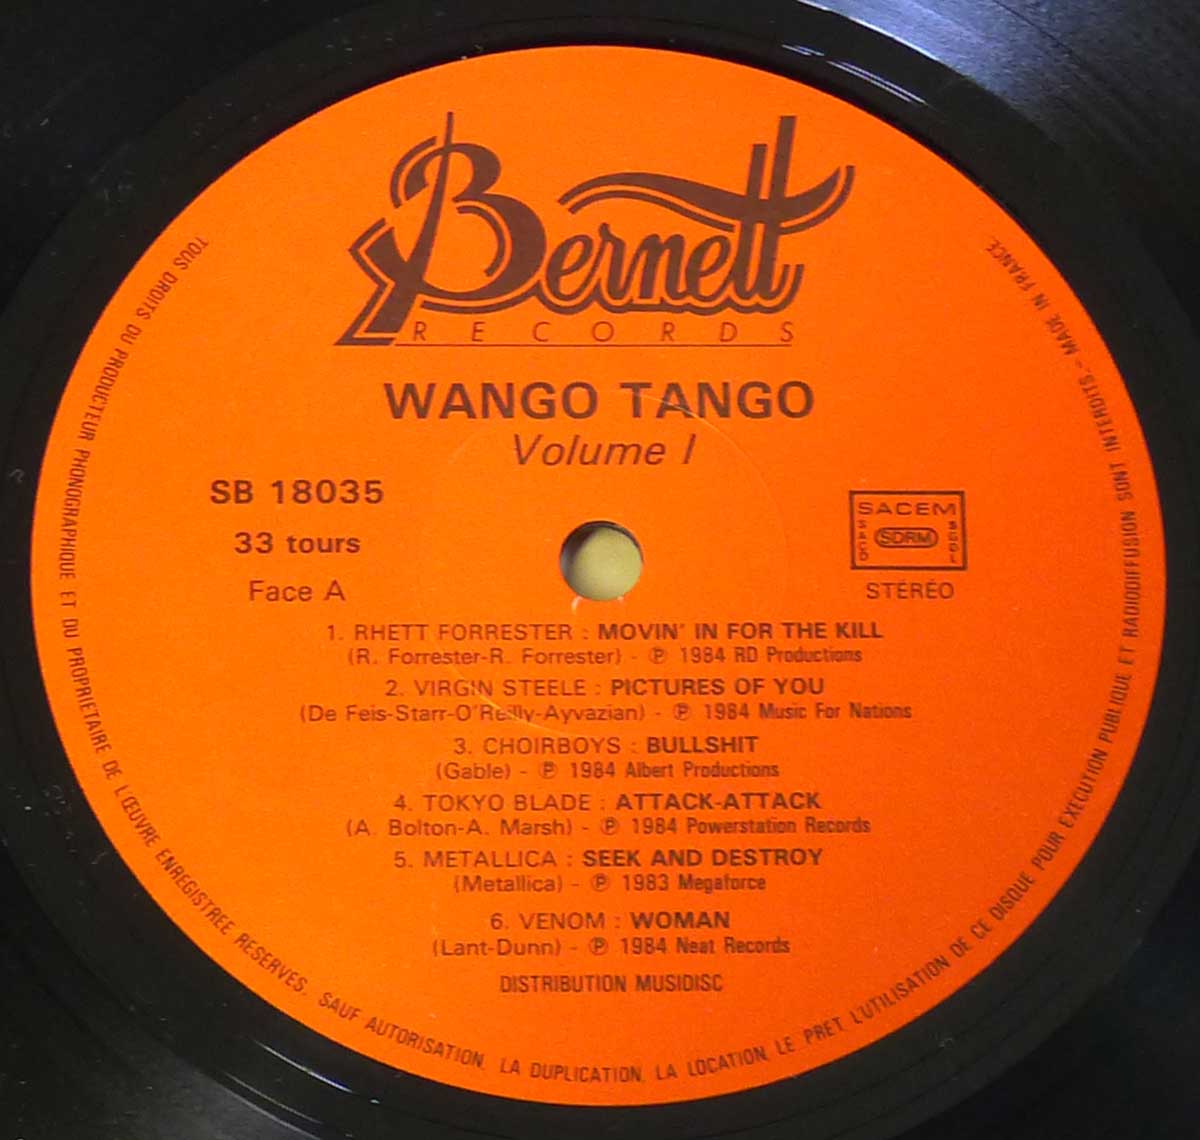 Close-up Photo of "Wango Tango Vol 1." Record Label 